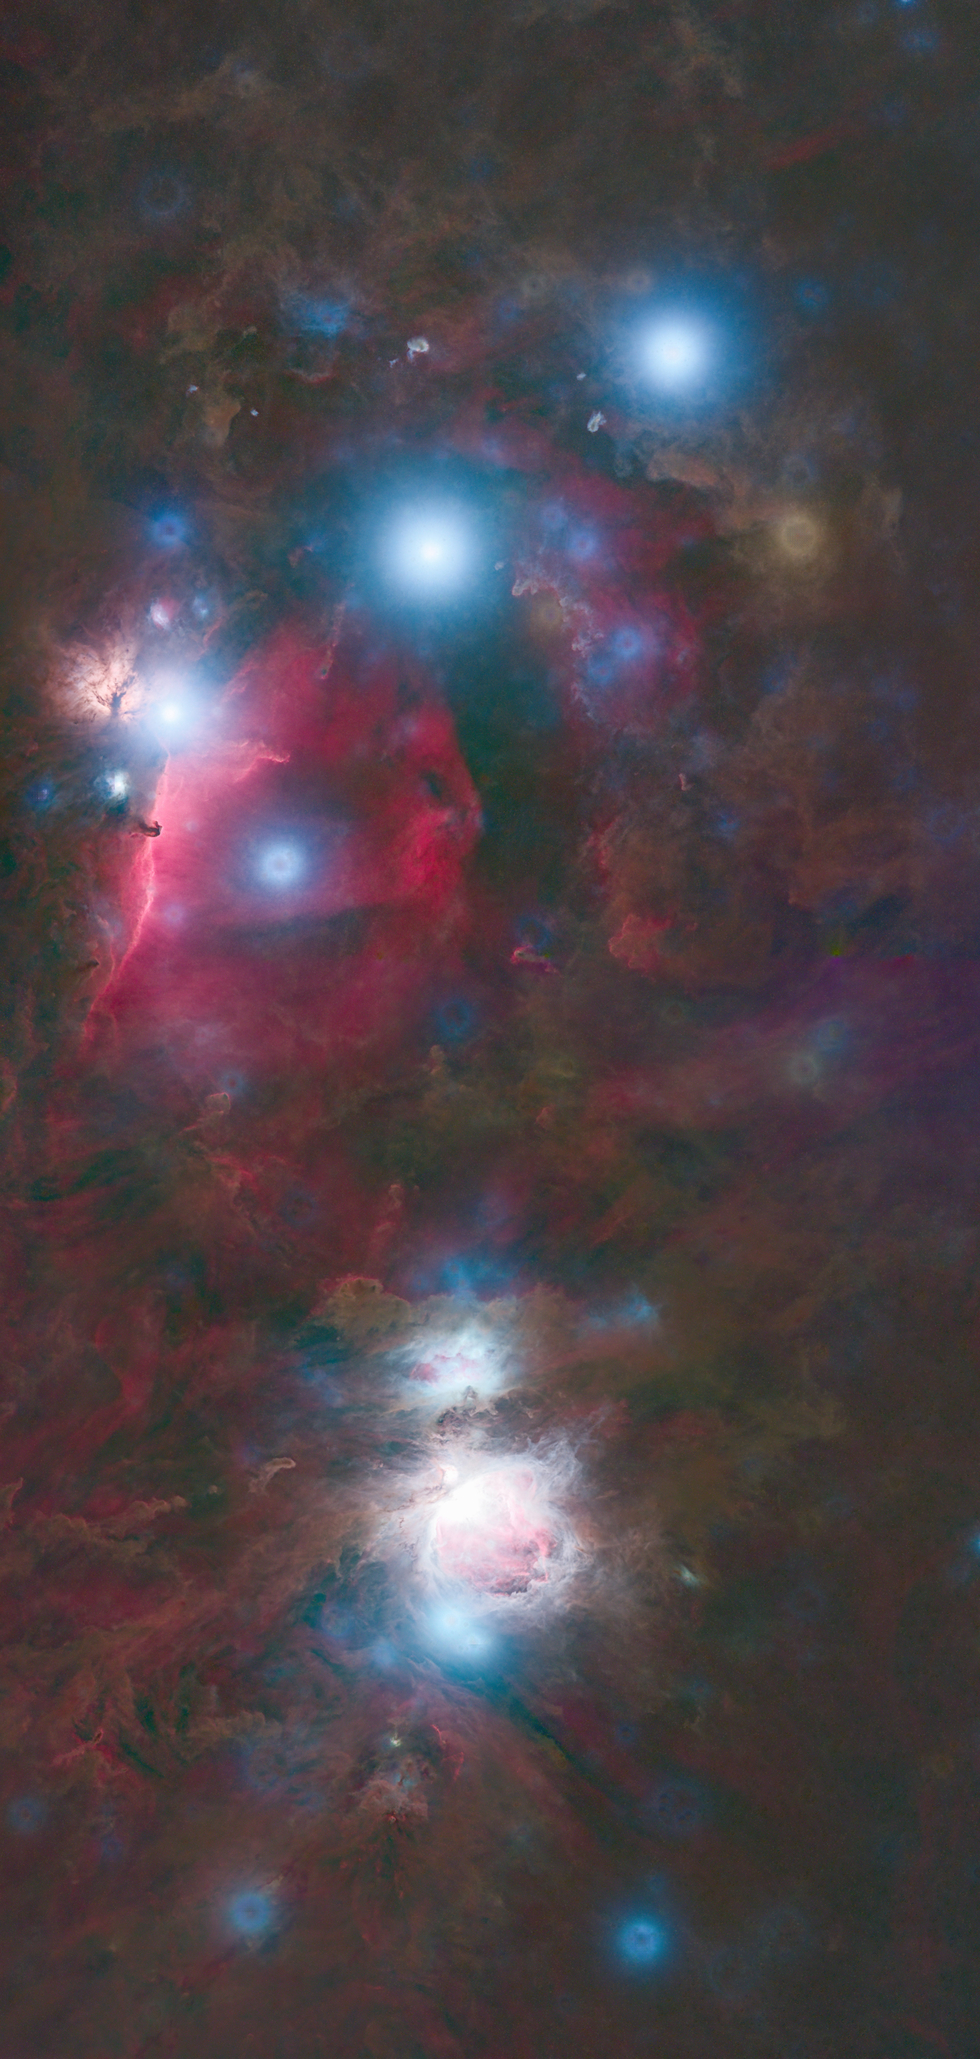 Orion Nebulae